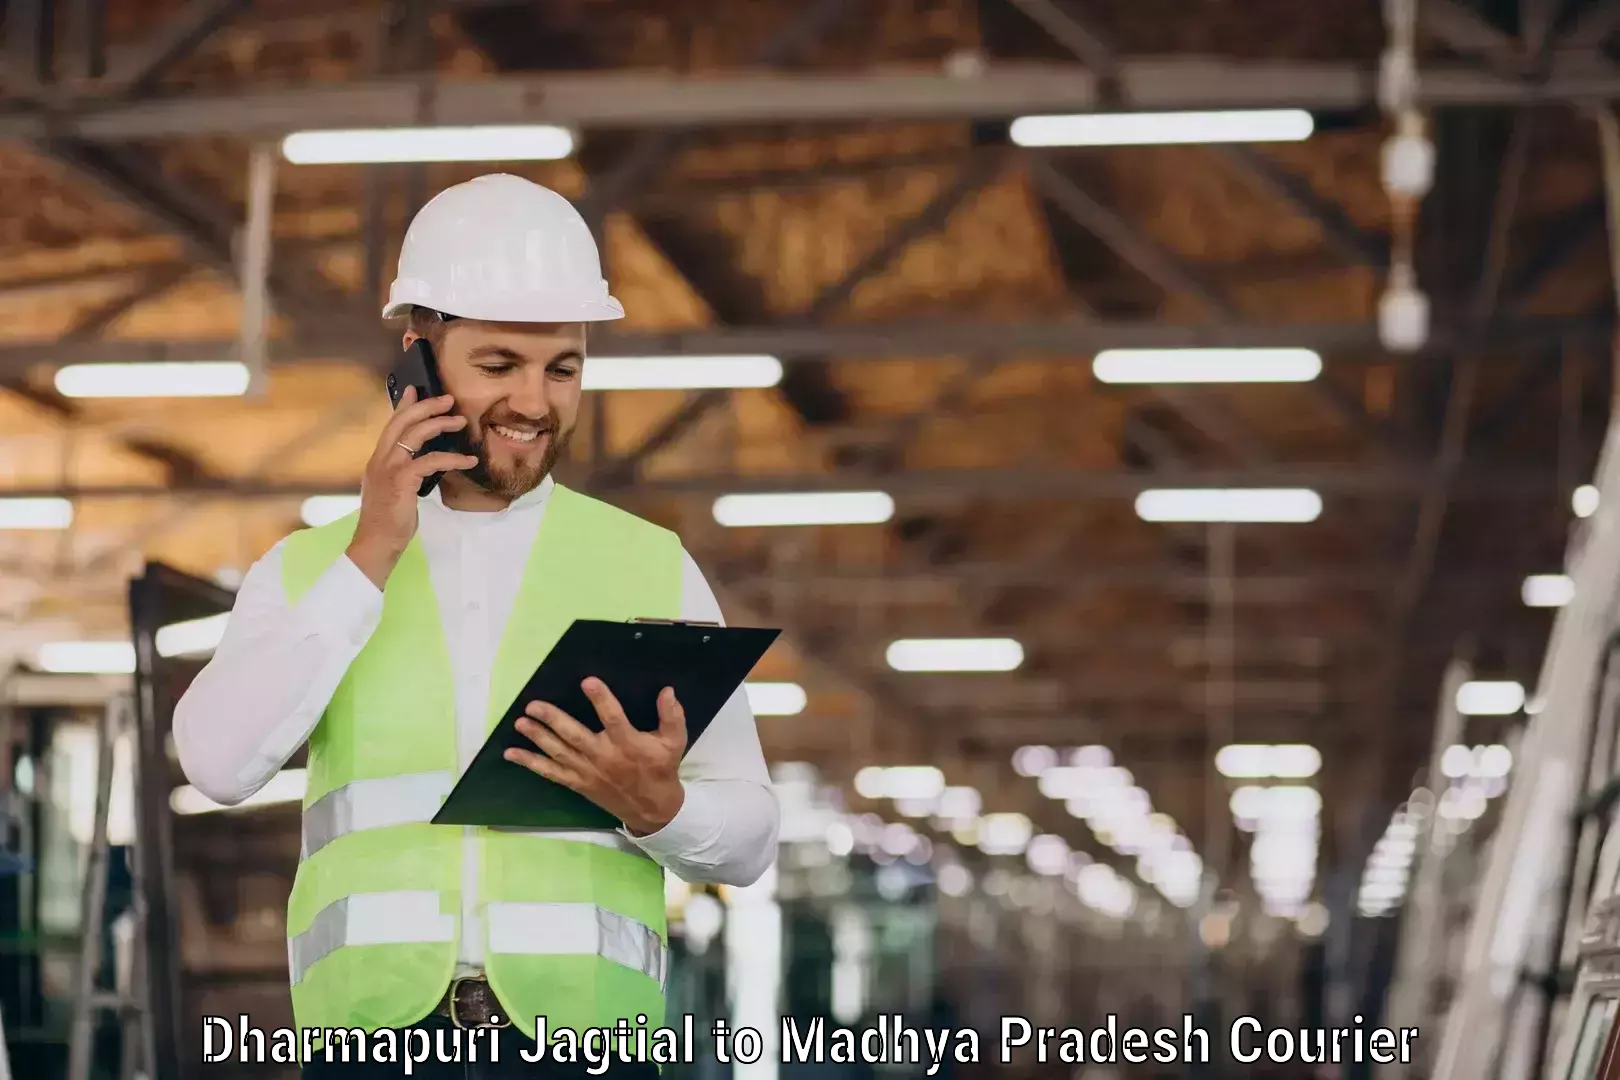 Quality courier partnerships Dharmapuri Jagtial to Amarwara